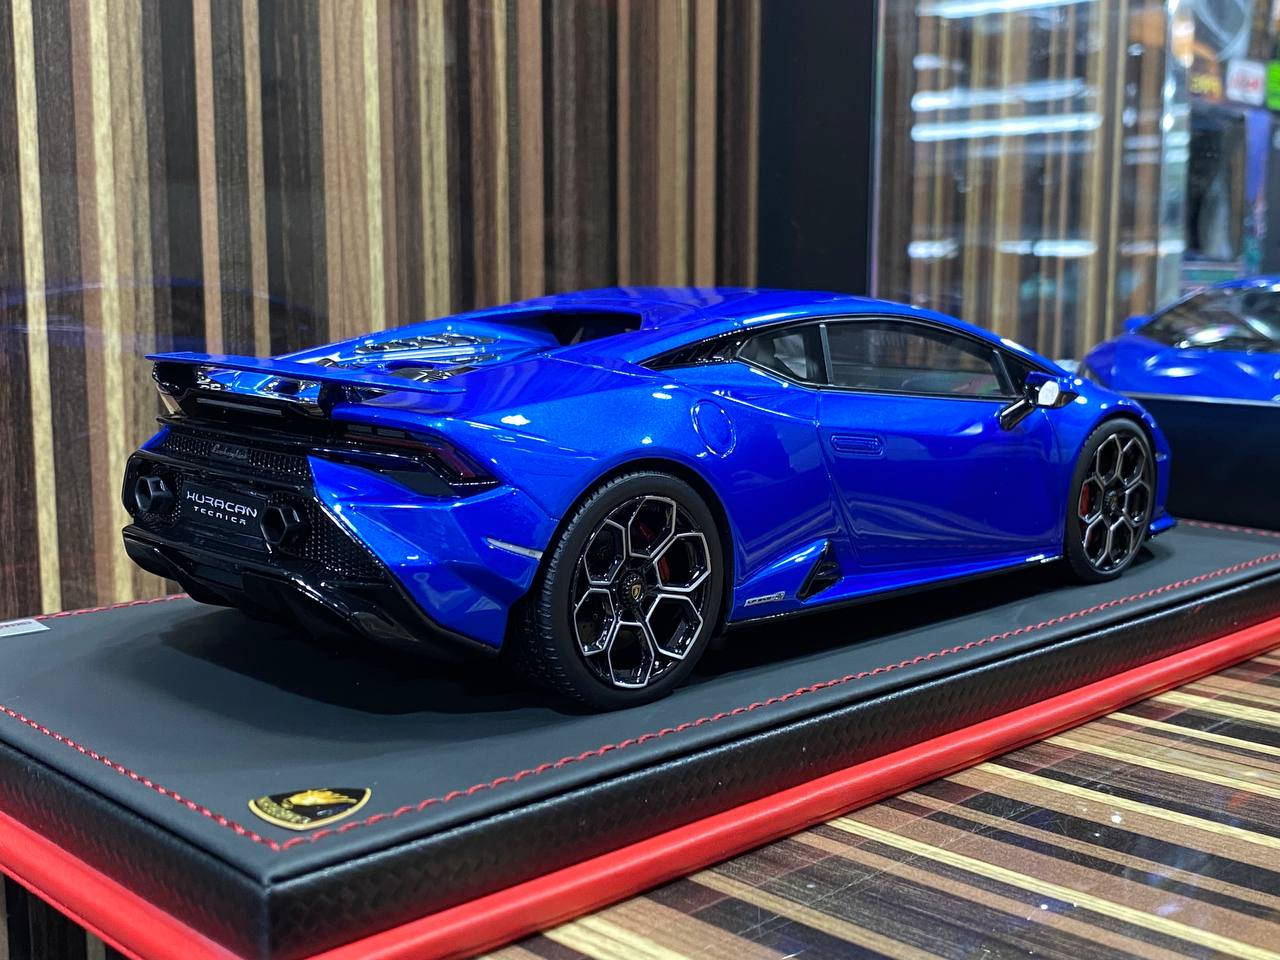 1/18 Resin Lamborghini Huracan Tecnica Blue by MR Collection|Sold in Dturman.com Dubai UAE.